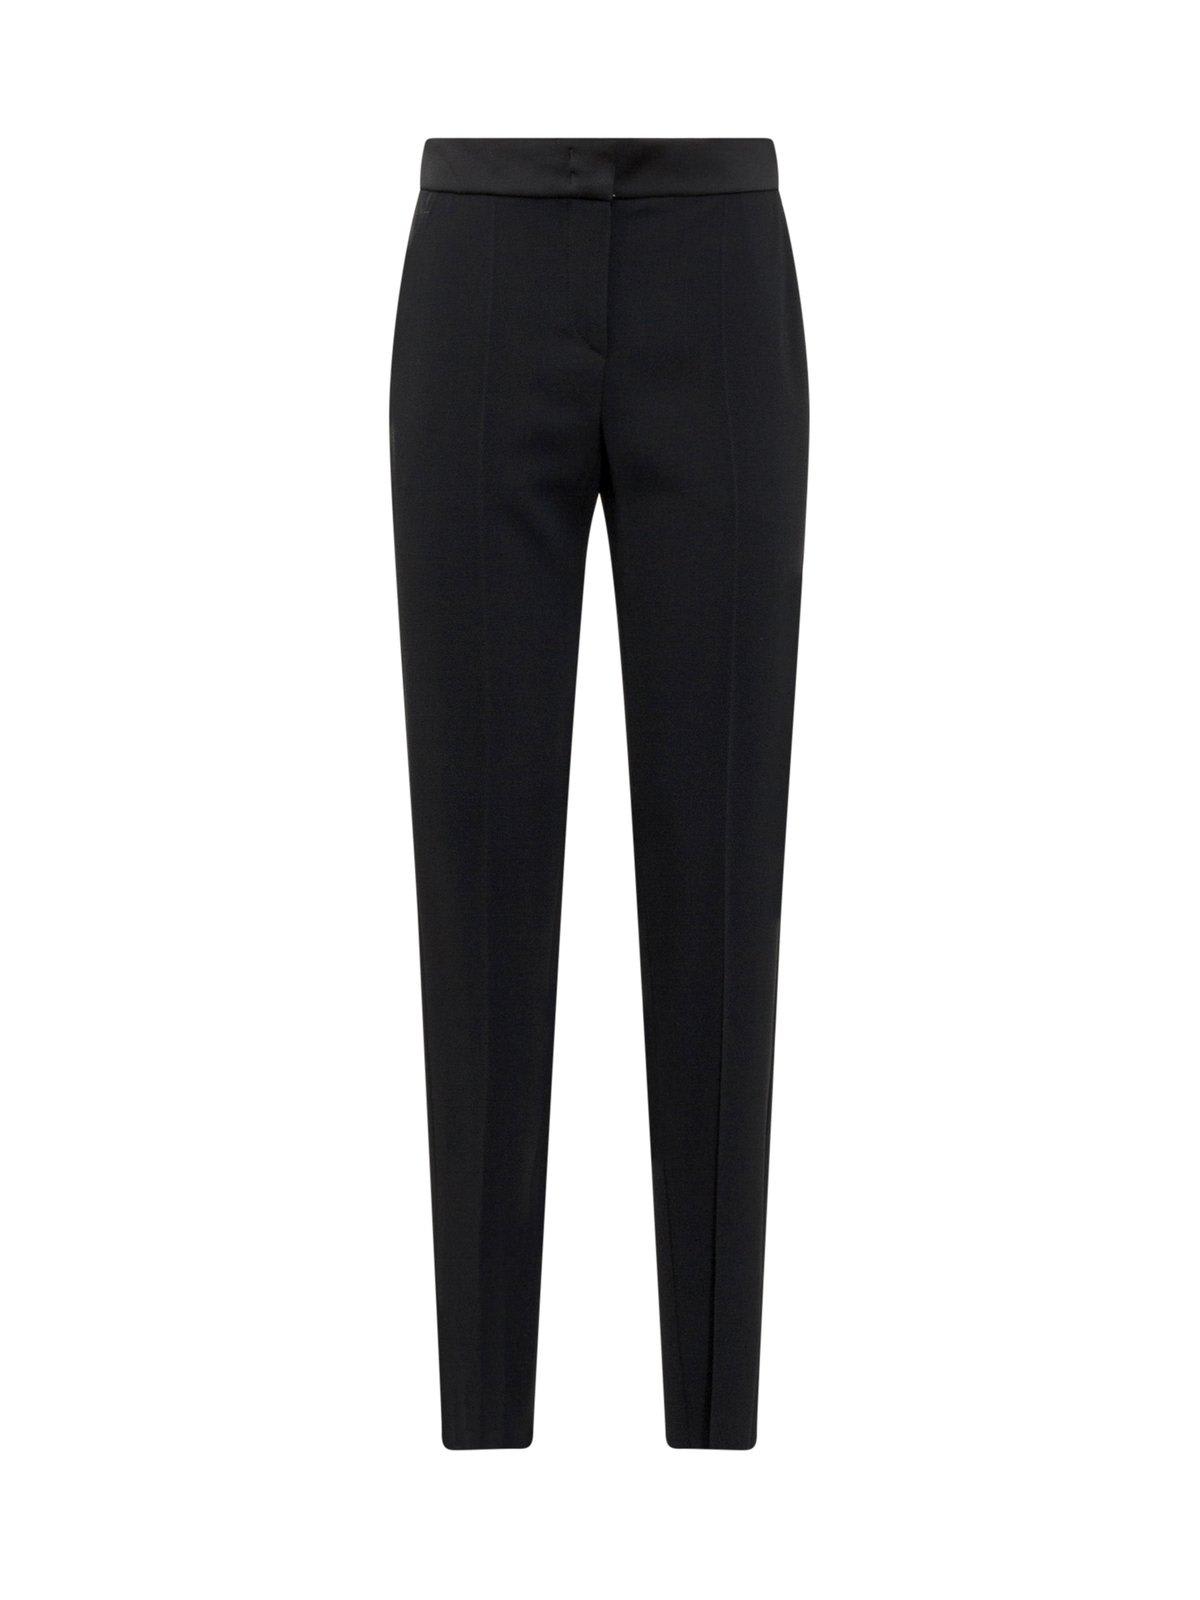 Giorgio Armani Women's Zip Side Straight Leg Dress Pant Black Size 48 -  Shop Linda's Stuff